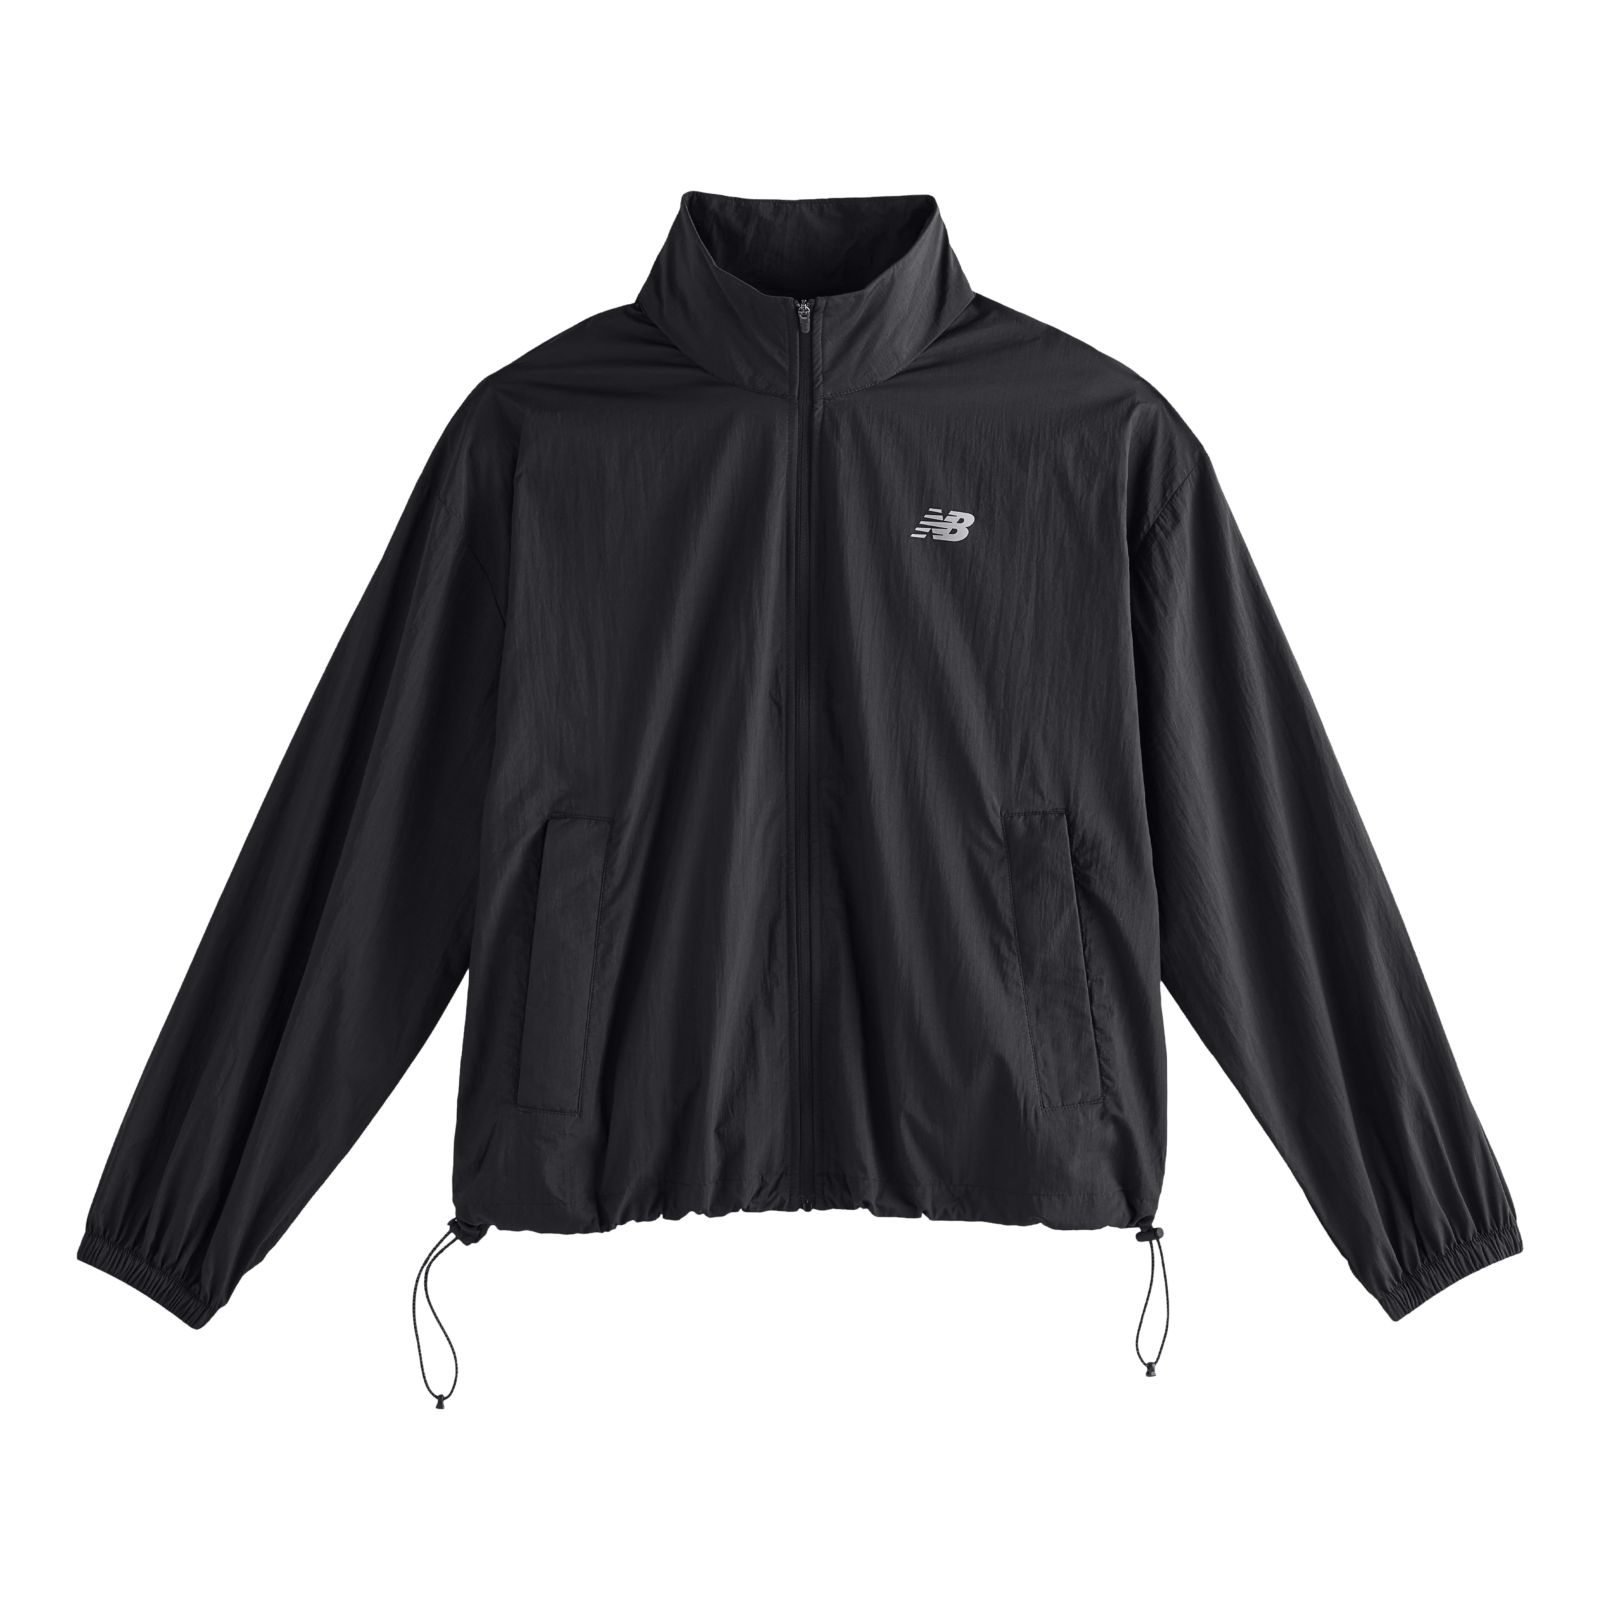 New Balance Men's Athletic Jacket Black, White TFMJ770BlkWht